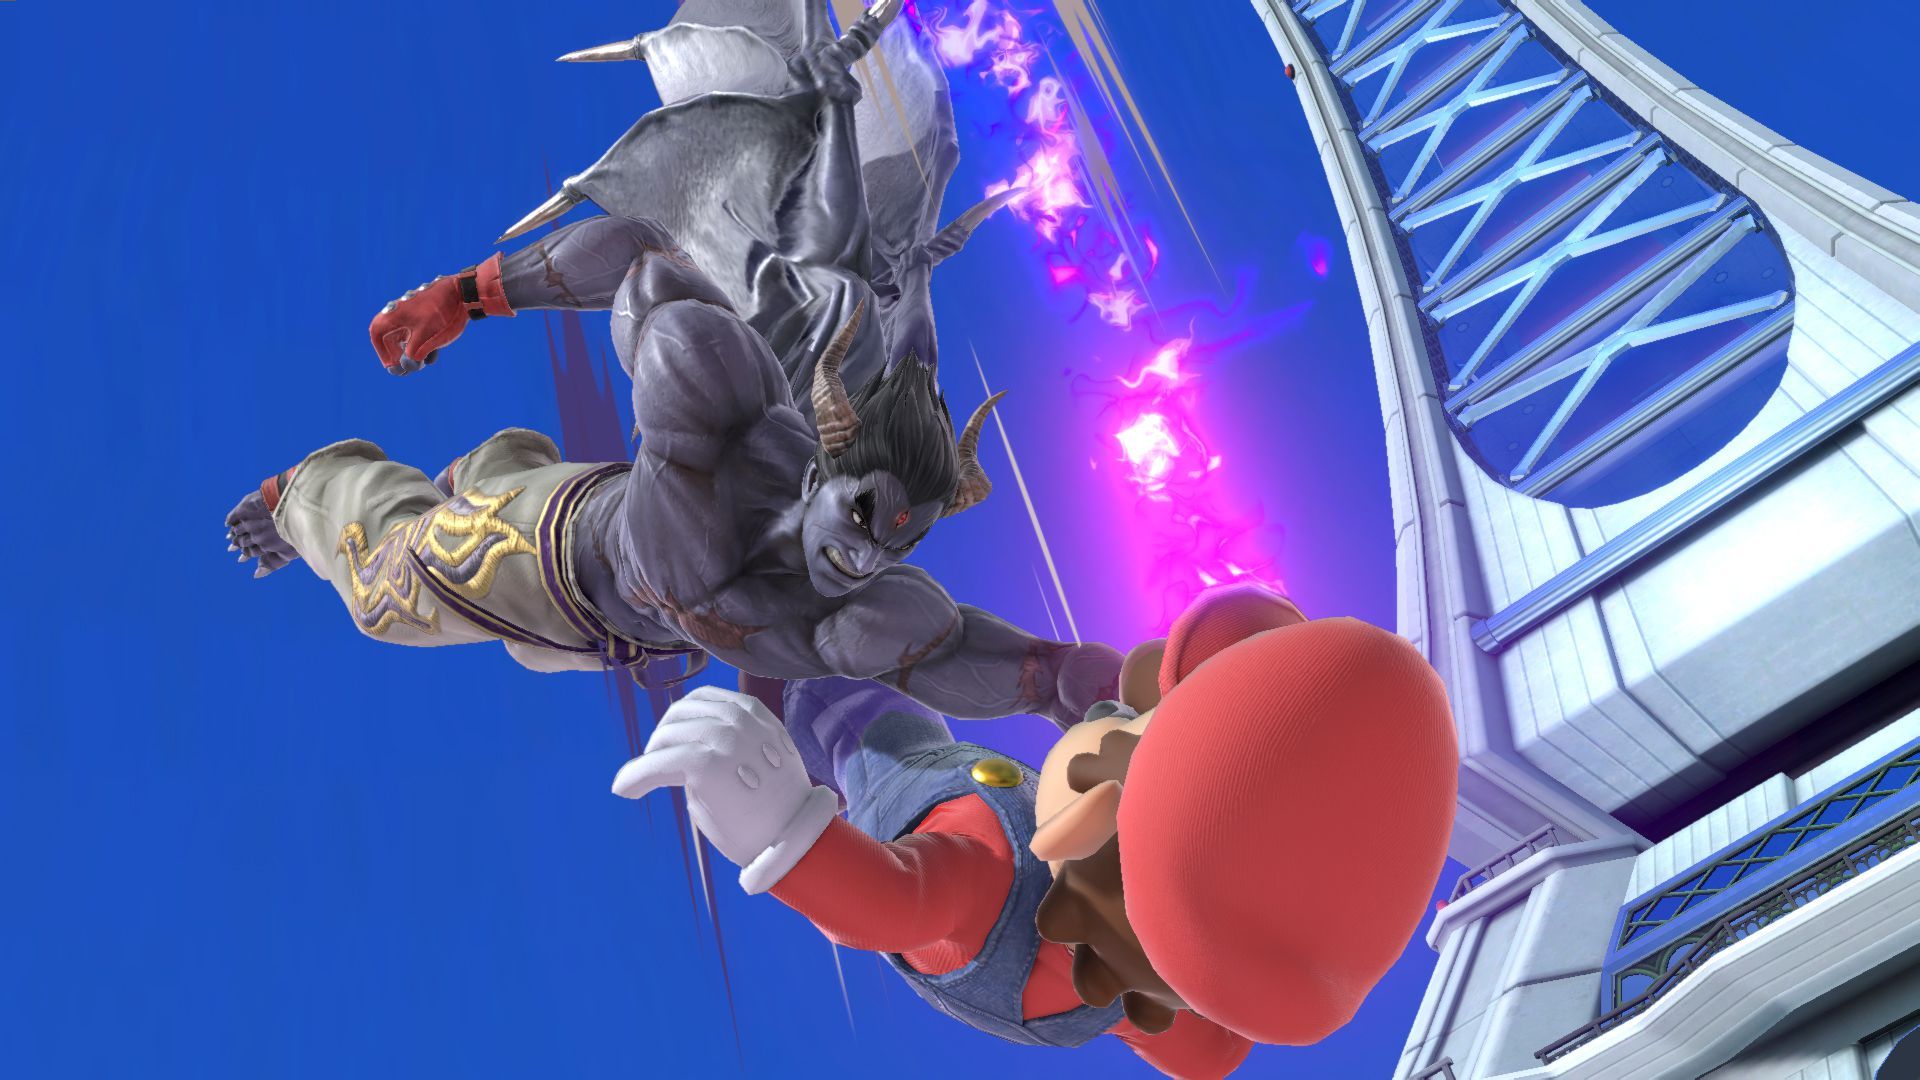 Screenshot of Bandai Namco's Kazuya Mishima attacking Nintendo's Super Mario in a scene from "Smash Bros. Ultimate."